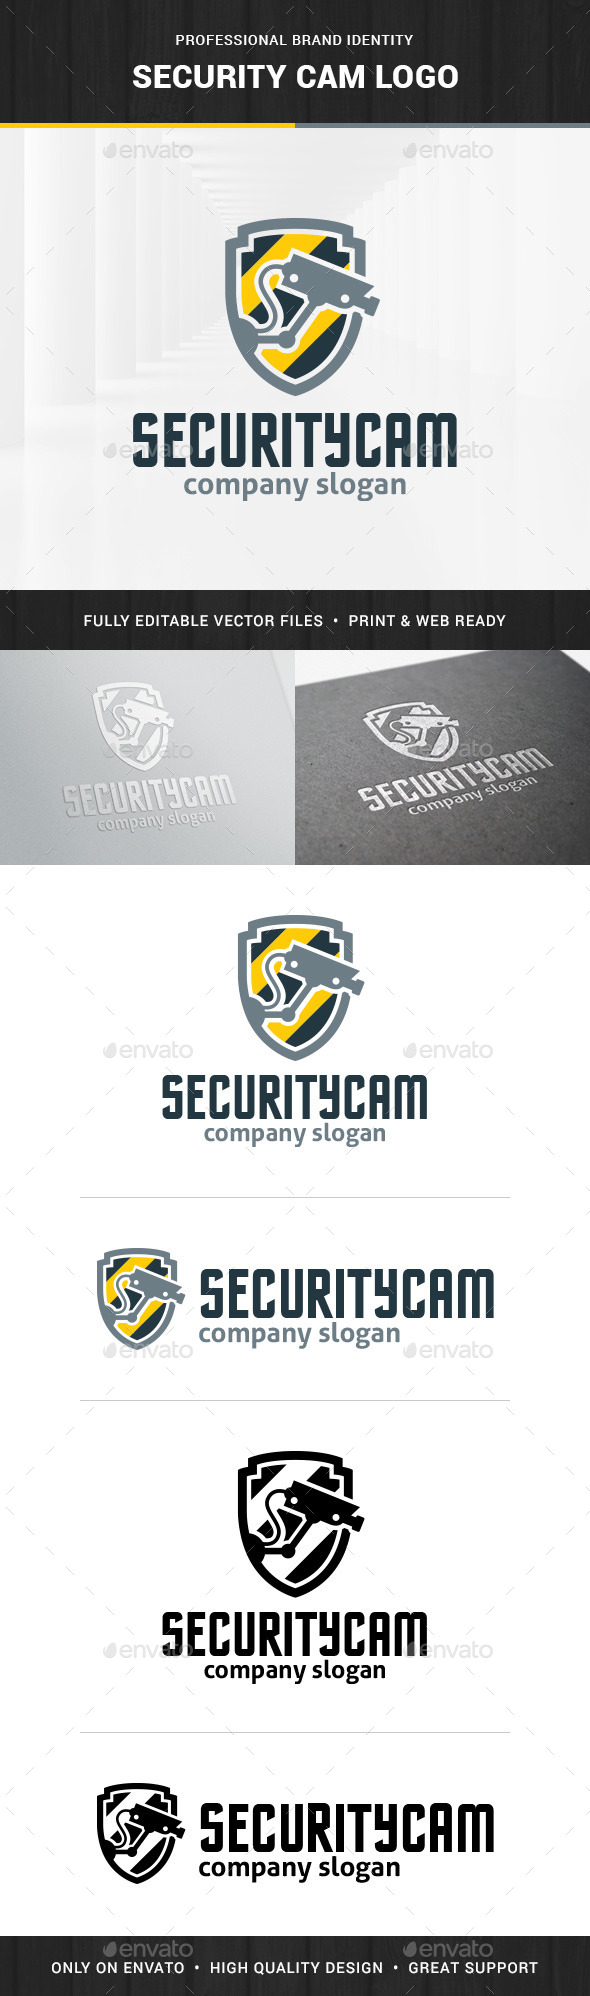 Security Cam Logo Template